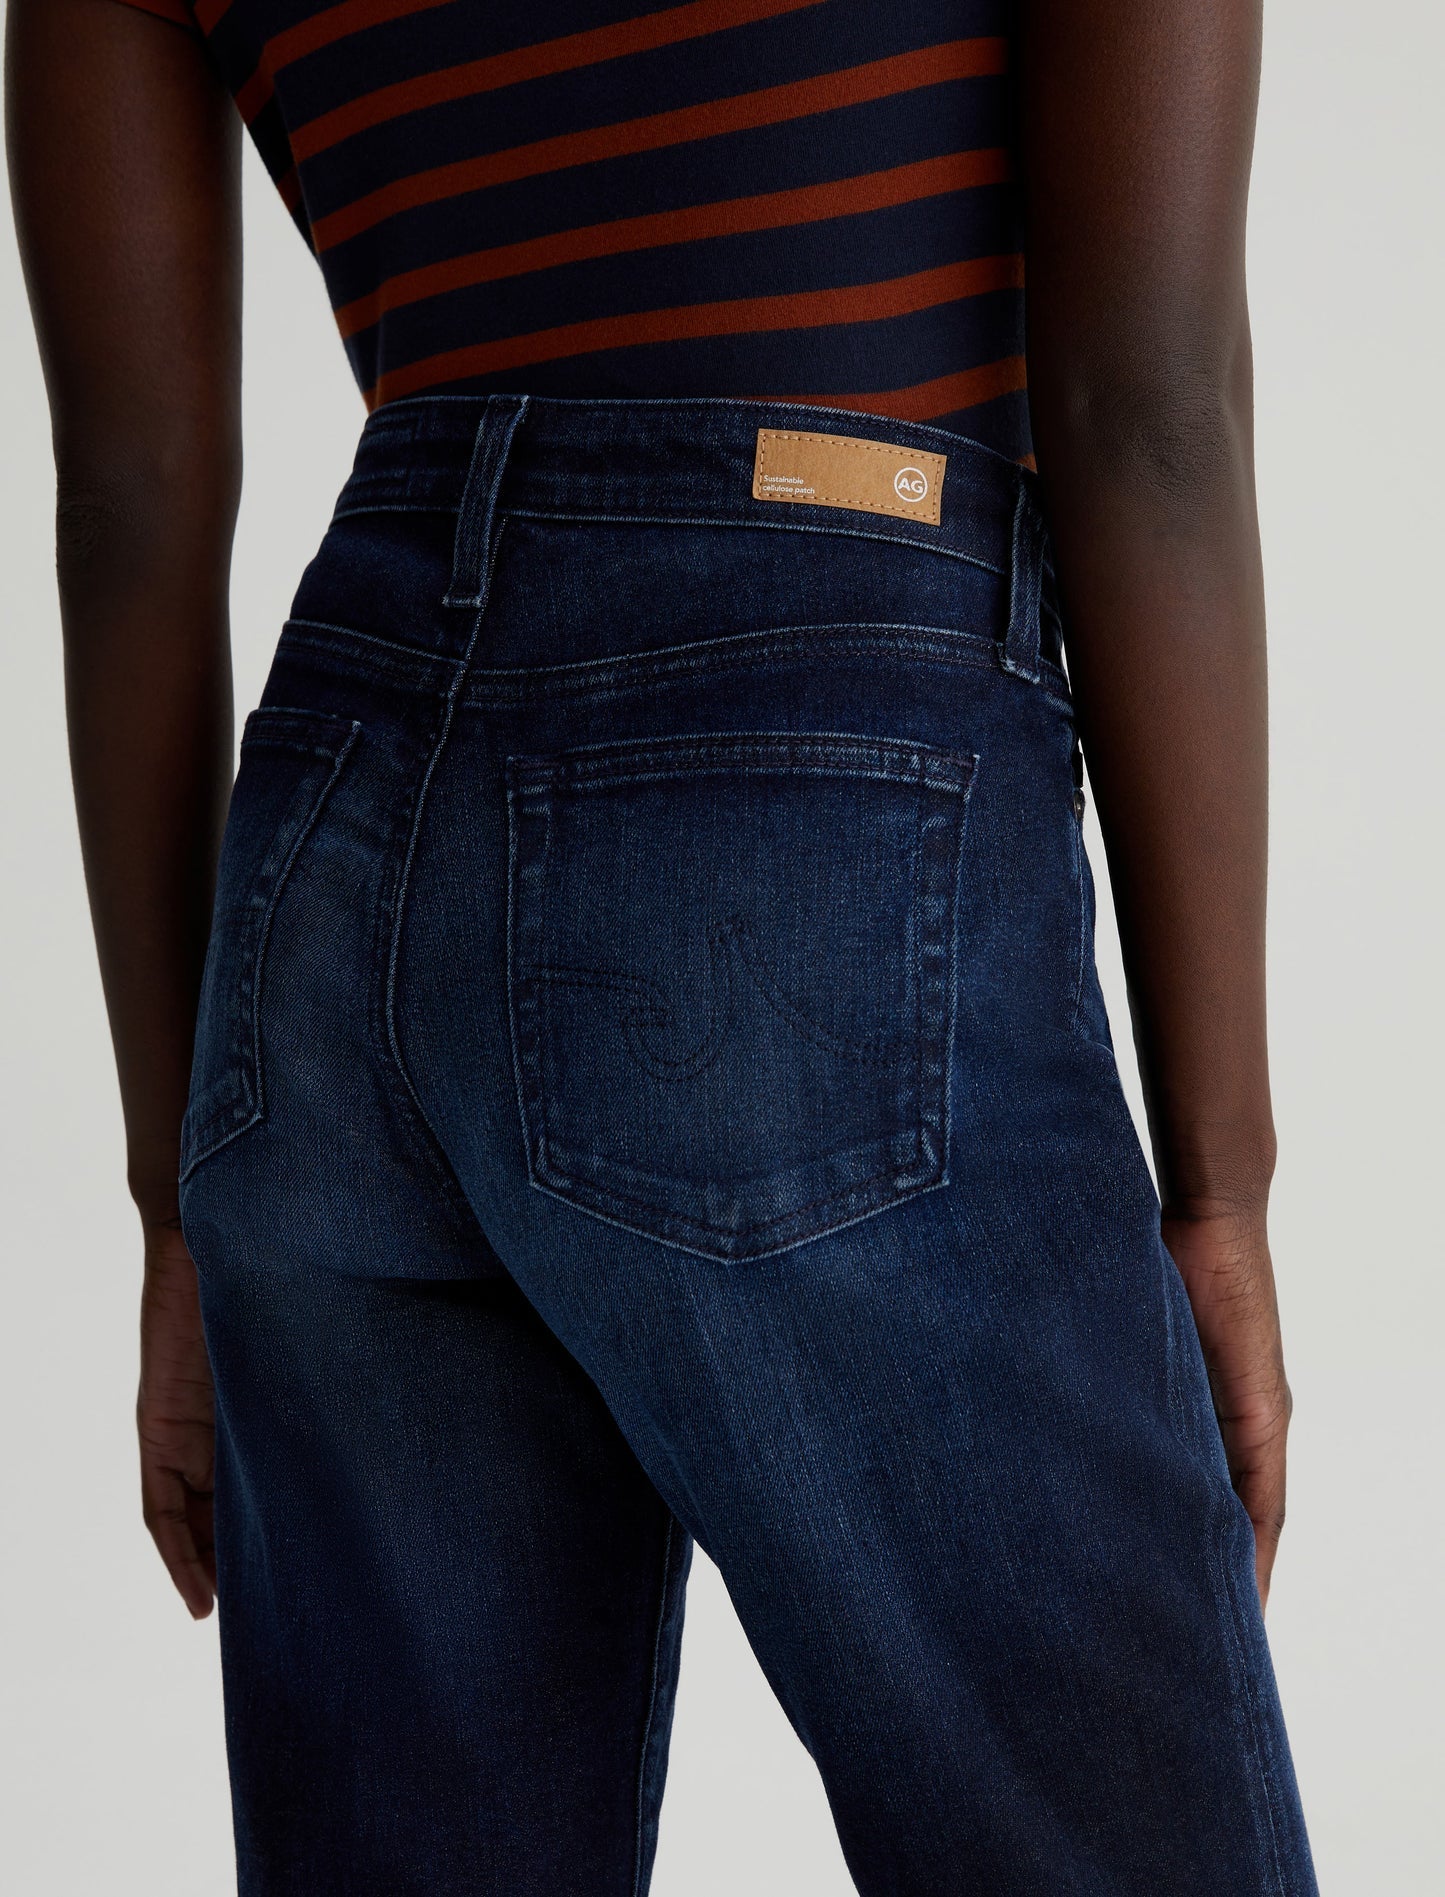 AG Mari Jeans - Premium Jean from Marina St Barth - Just $225! Shop now at Marina St Barth